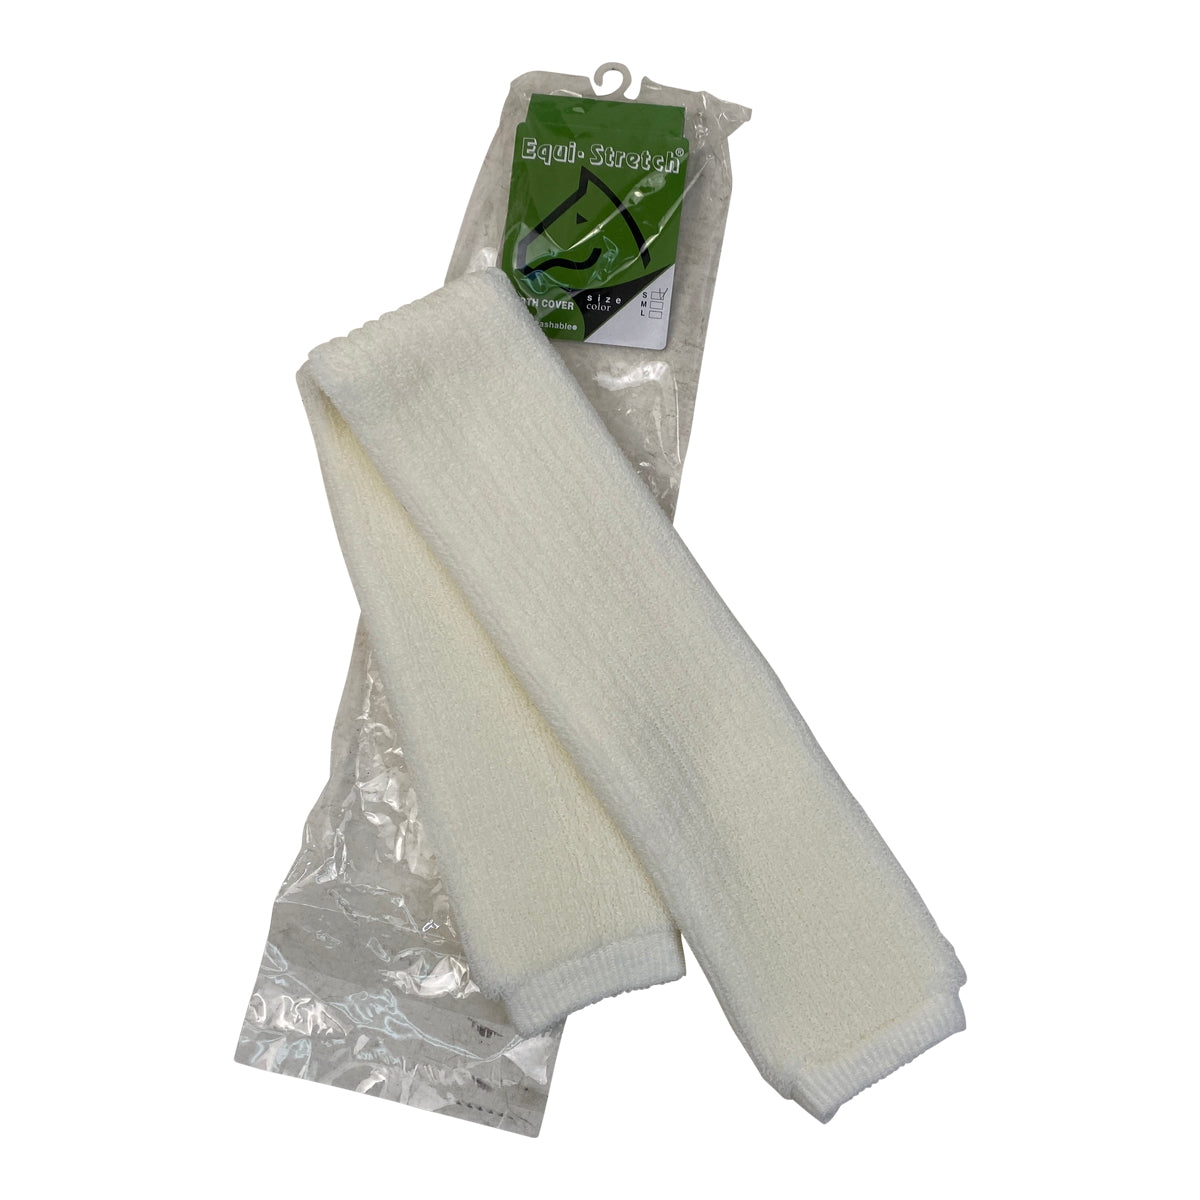 Equi-Stretch Girth Sock in White